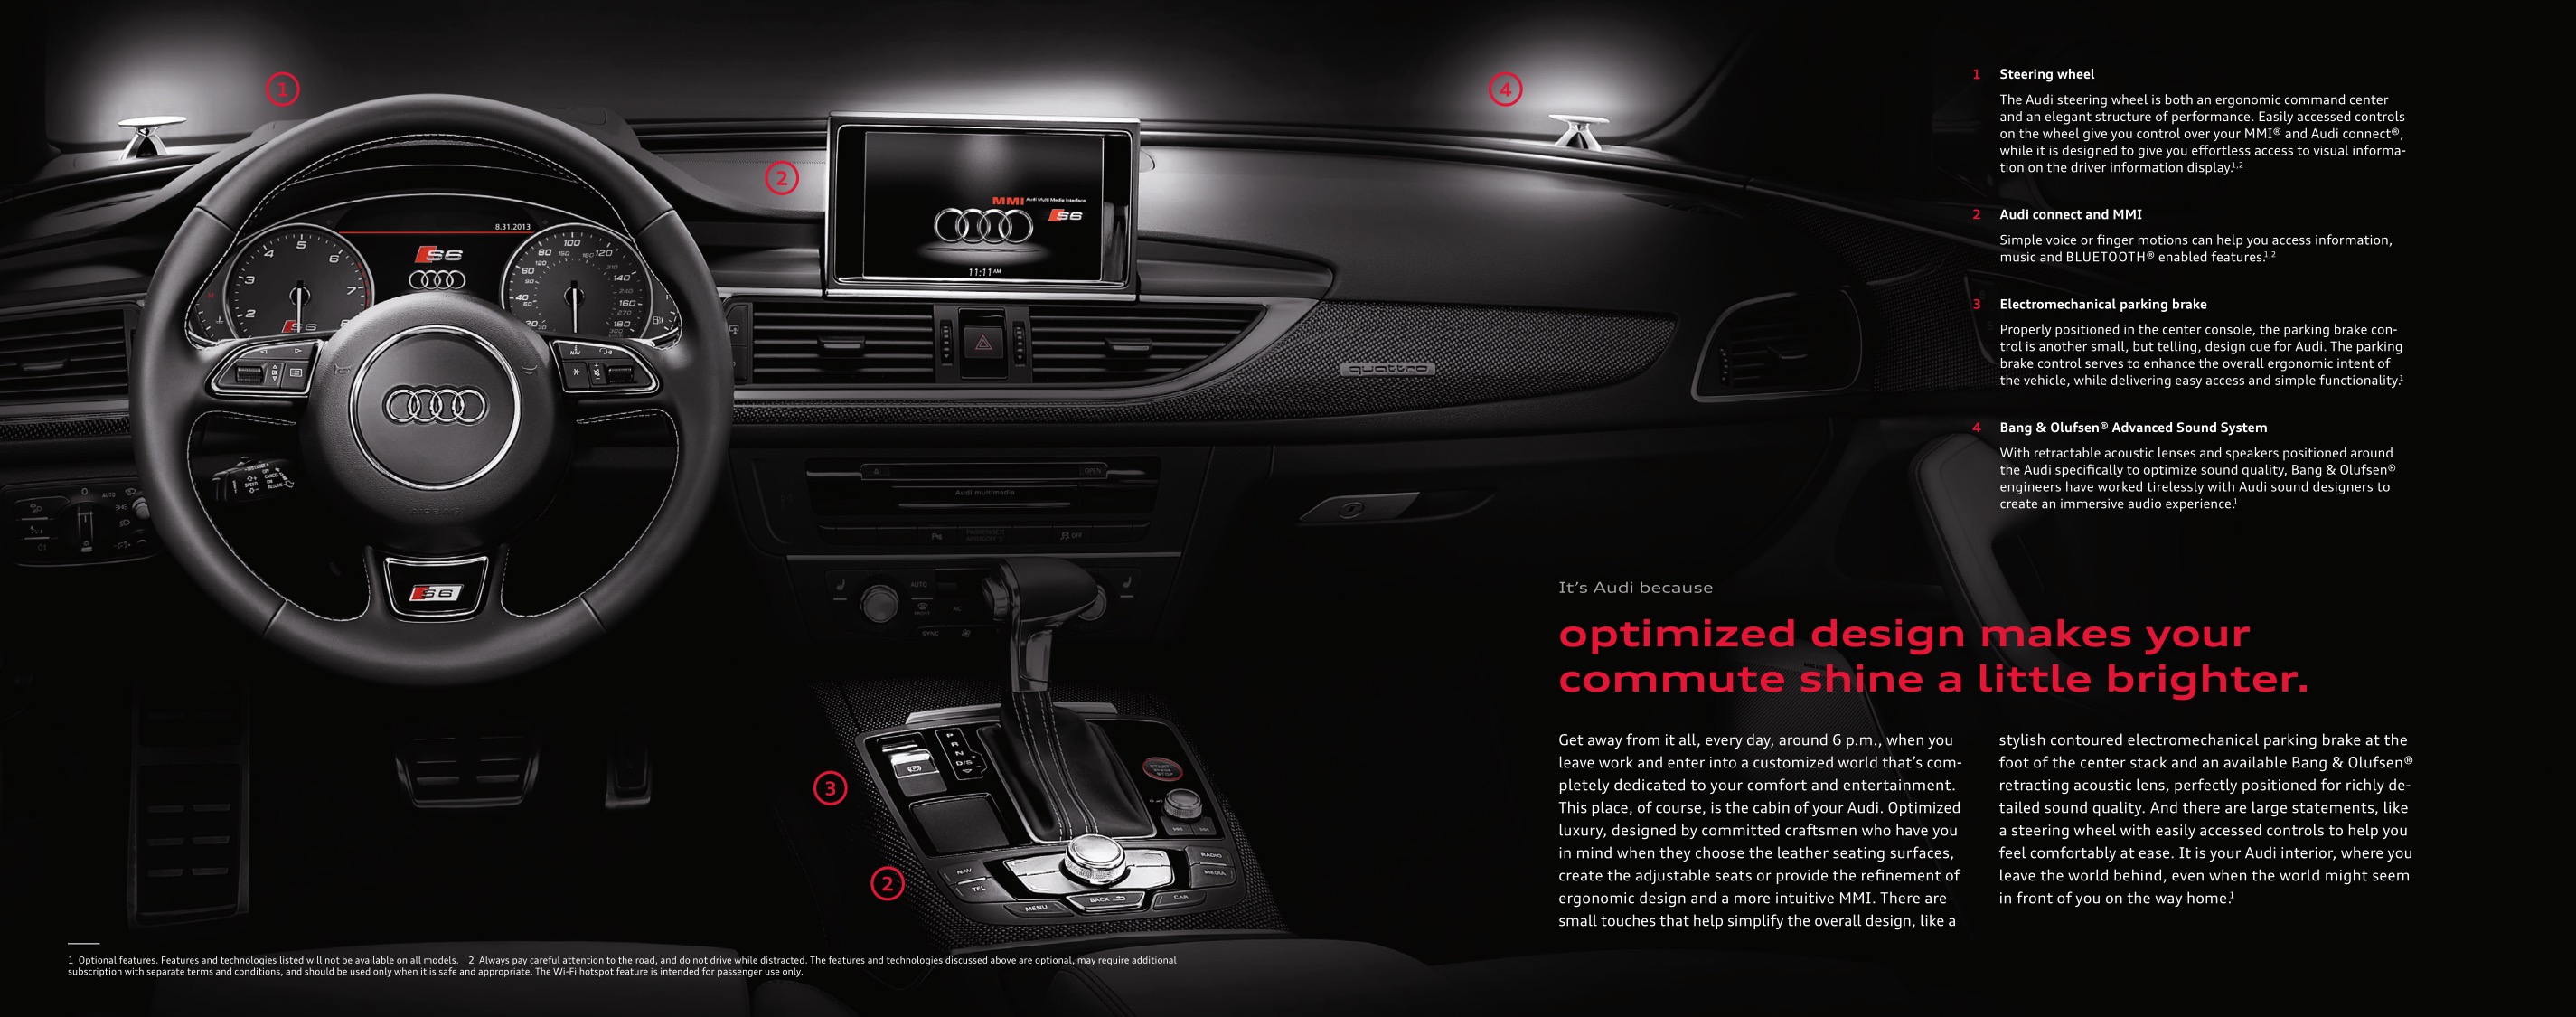 2014 Audi A6 Brochure Page 23